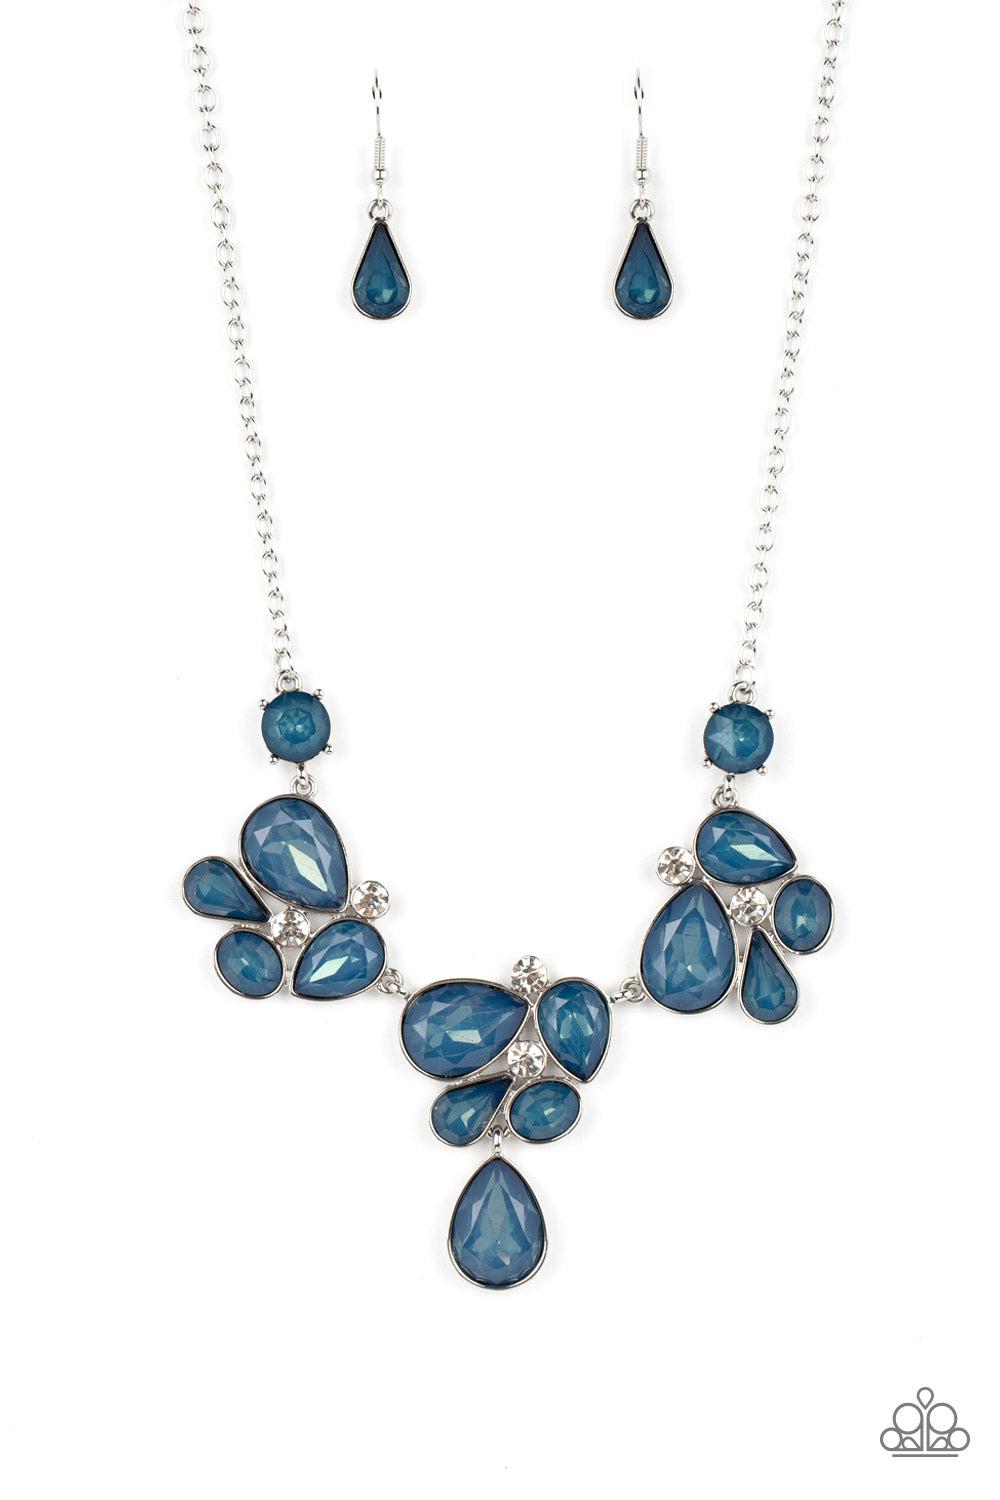 Everglade Escape Blue Gem Necklace - Paparazzi Accessories- lightbox - CarasShop.com - $5 Jewelry by Cara Jewels